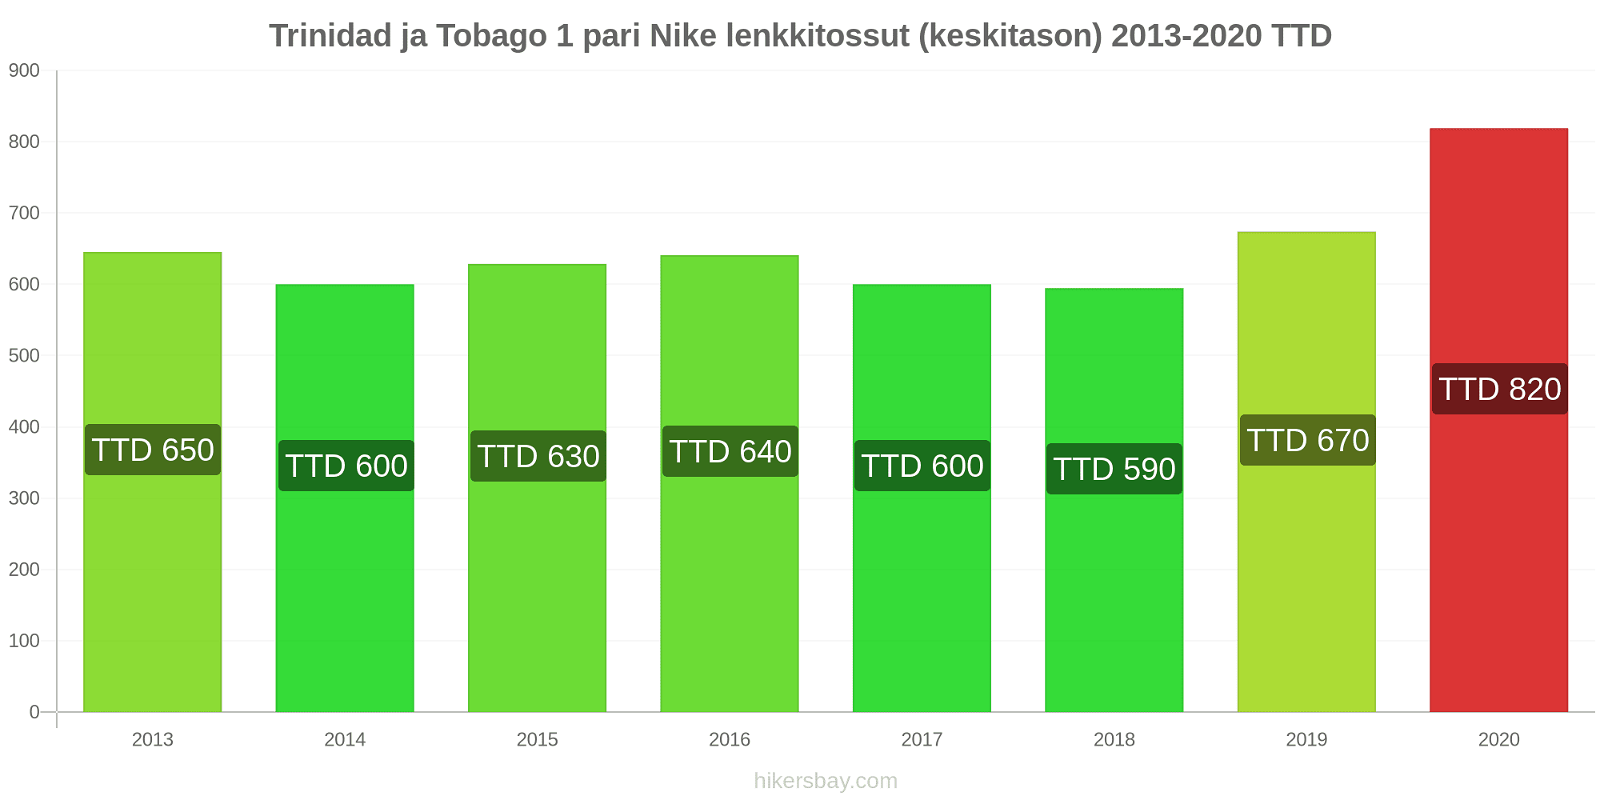 Trinidad ja Tobago hintojen muutokset 1 pari Nike lenkkitossut (keskitason) hikersbay.com